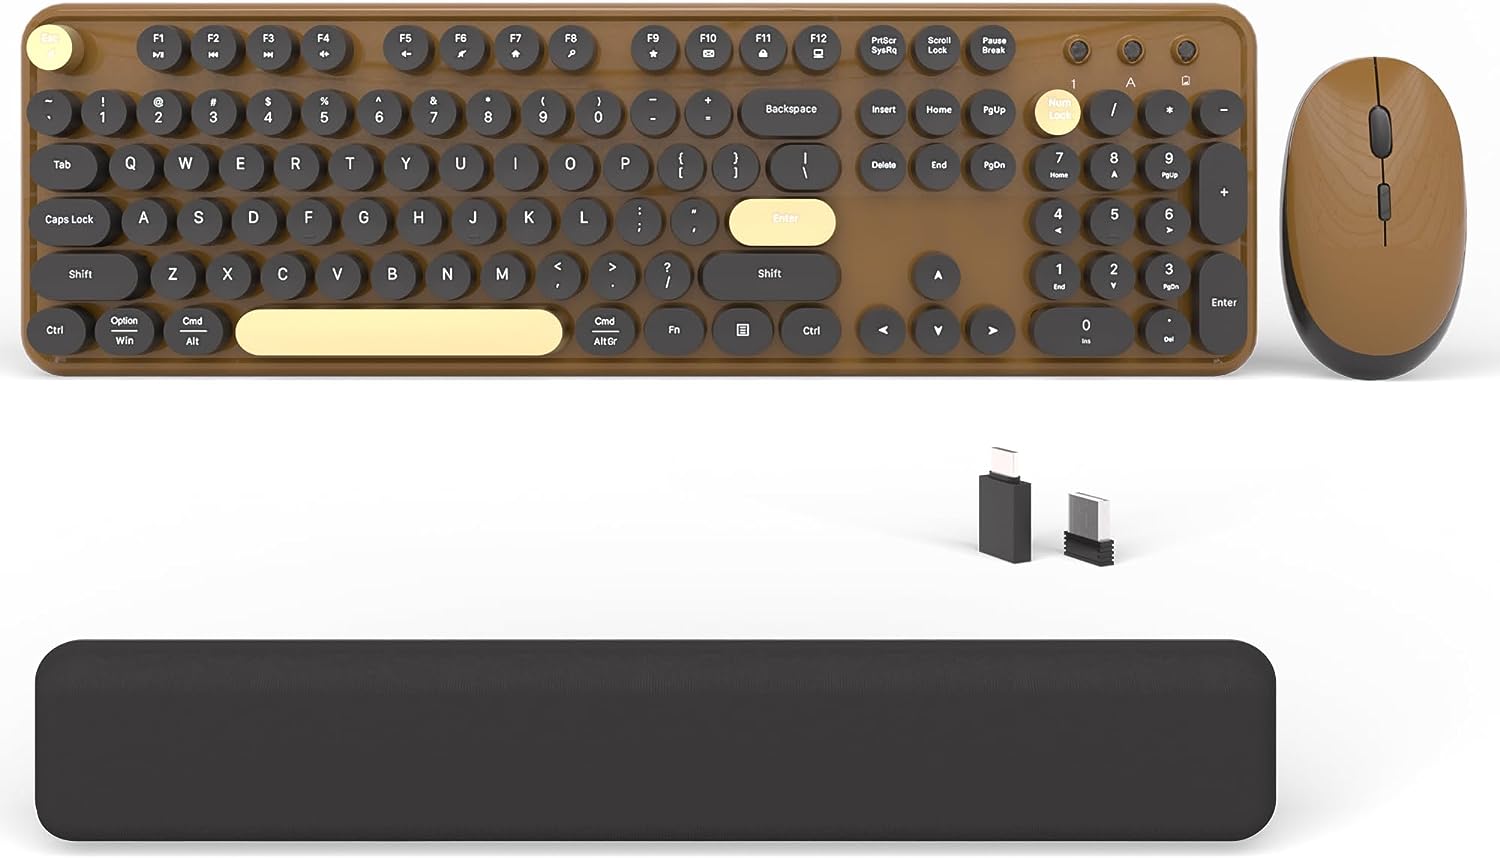 Teclados inalámbricos para computadora, mouse combinados, teclado retr -  VIRTUAL MUEBLES